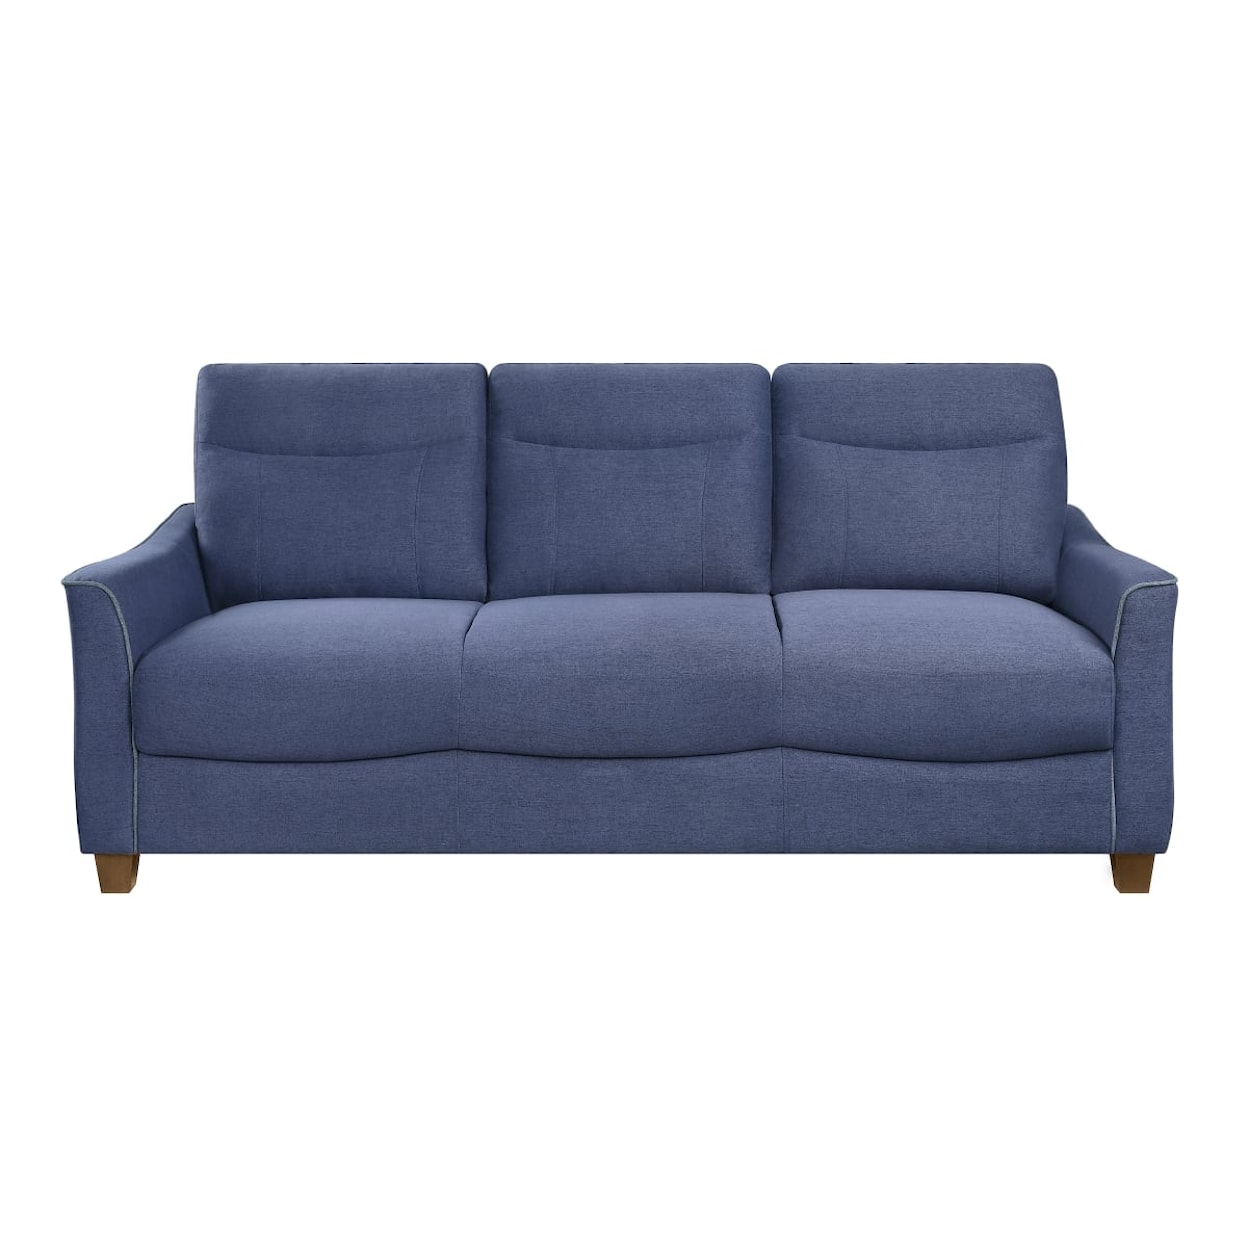 Homelegance Furniture Harstad Sofa